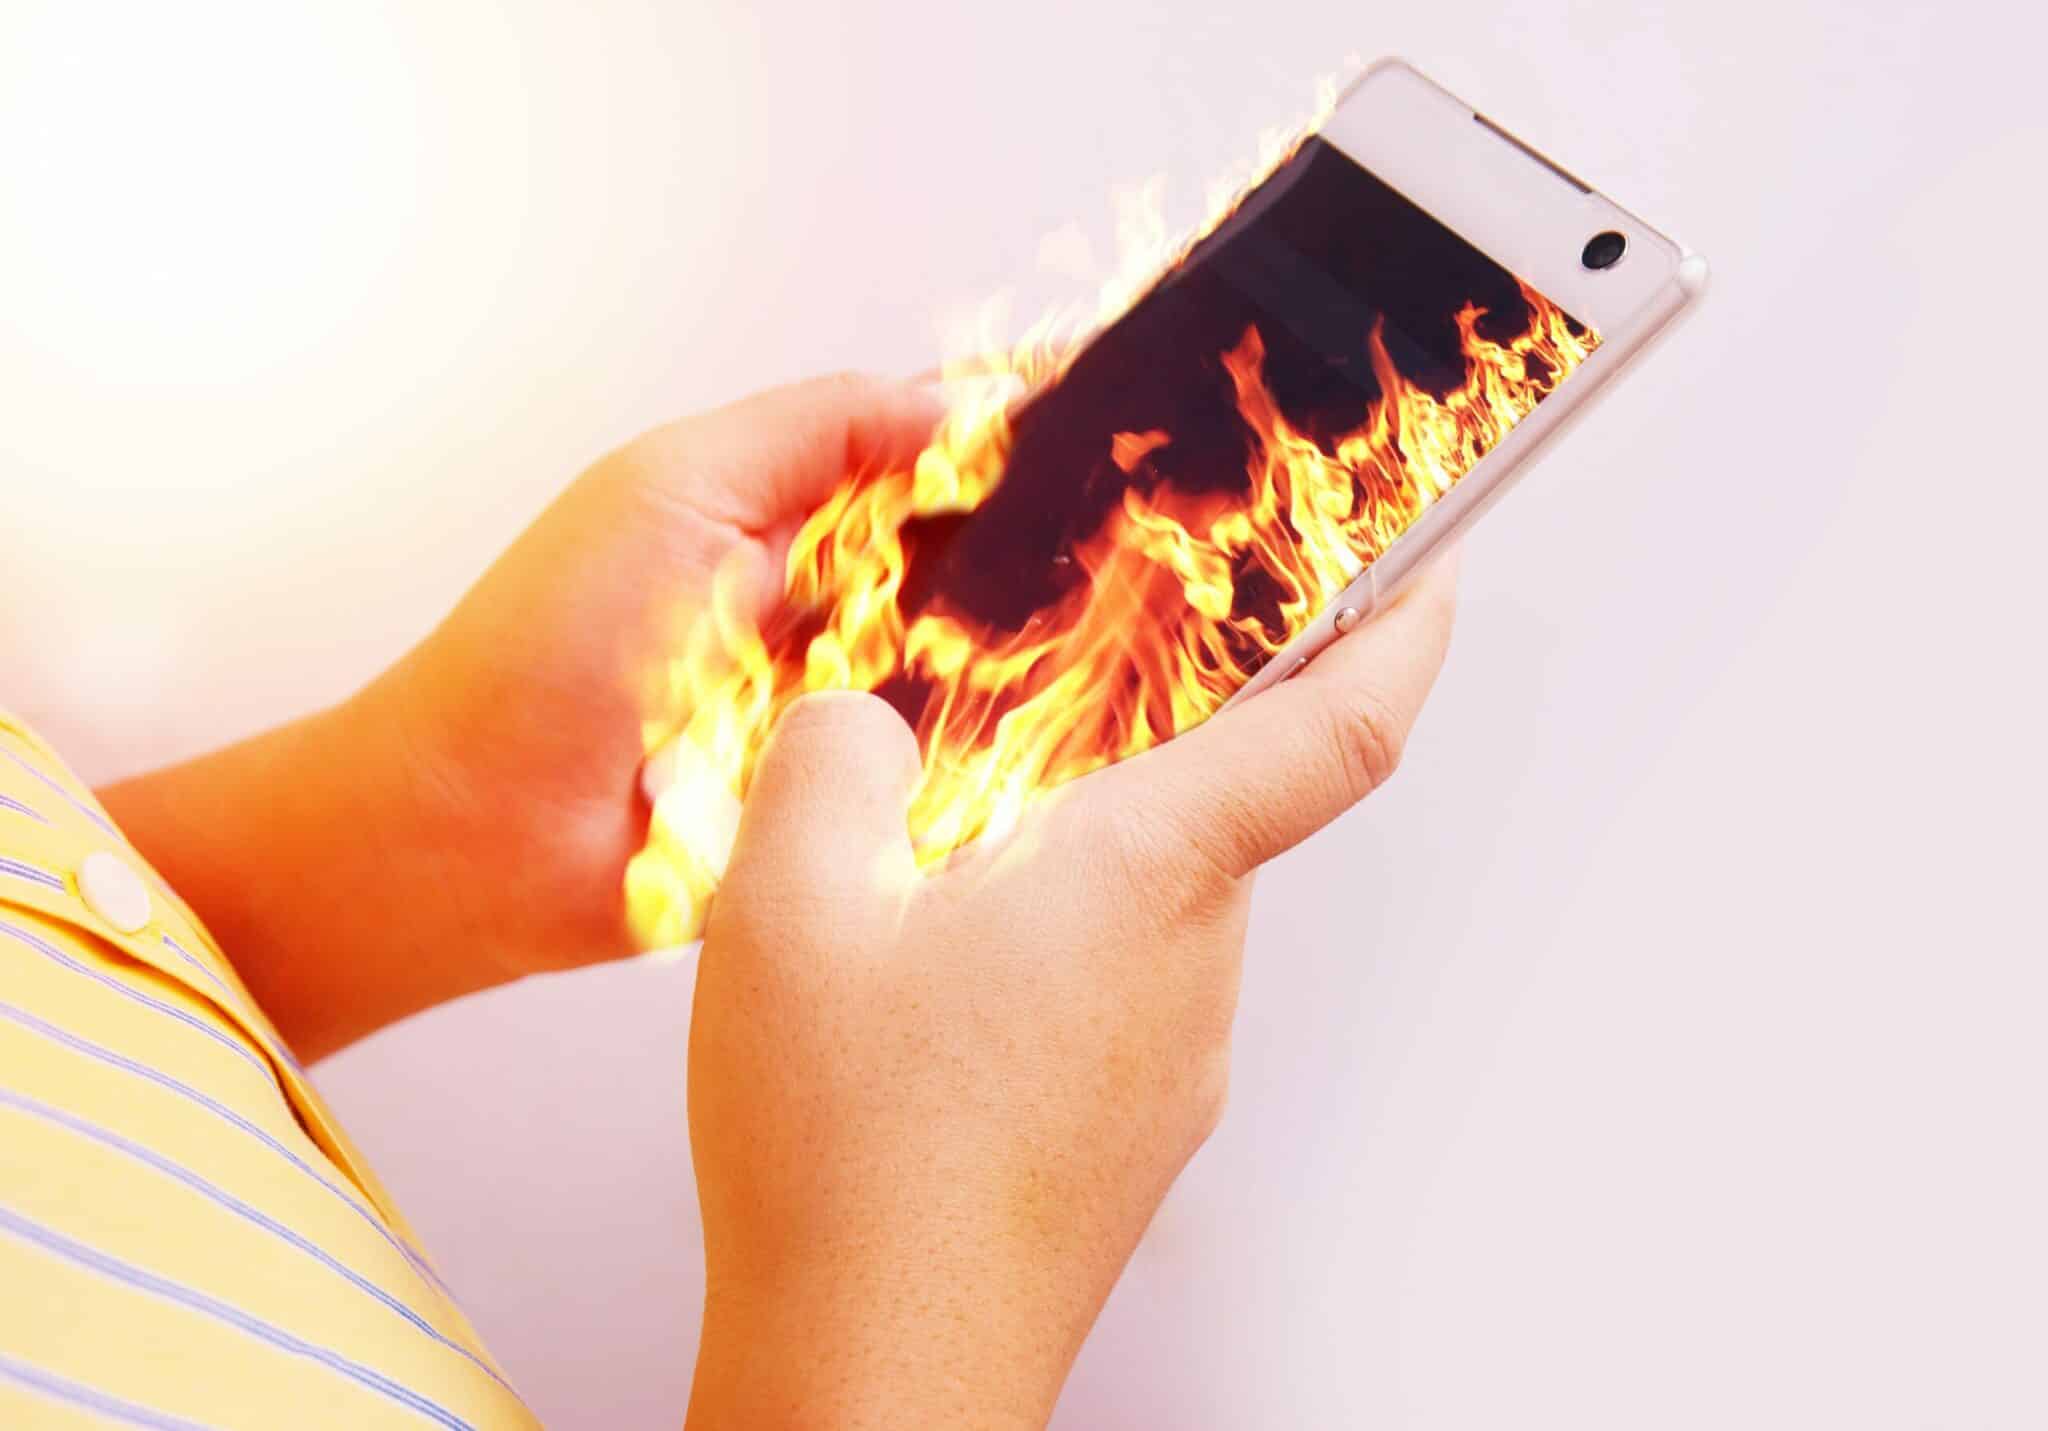 phone burning in hand